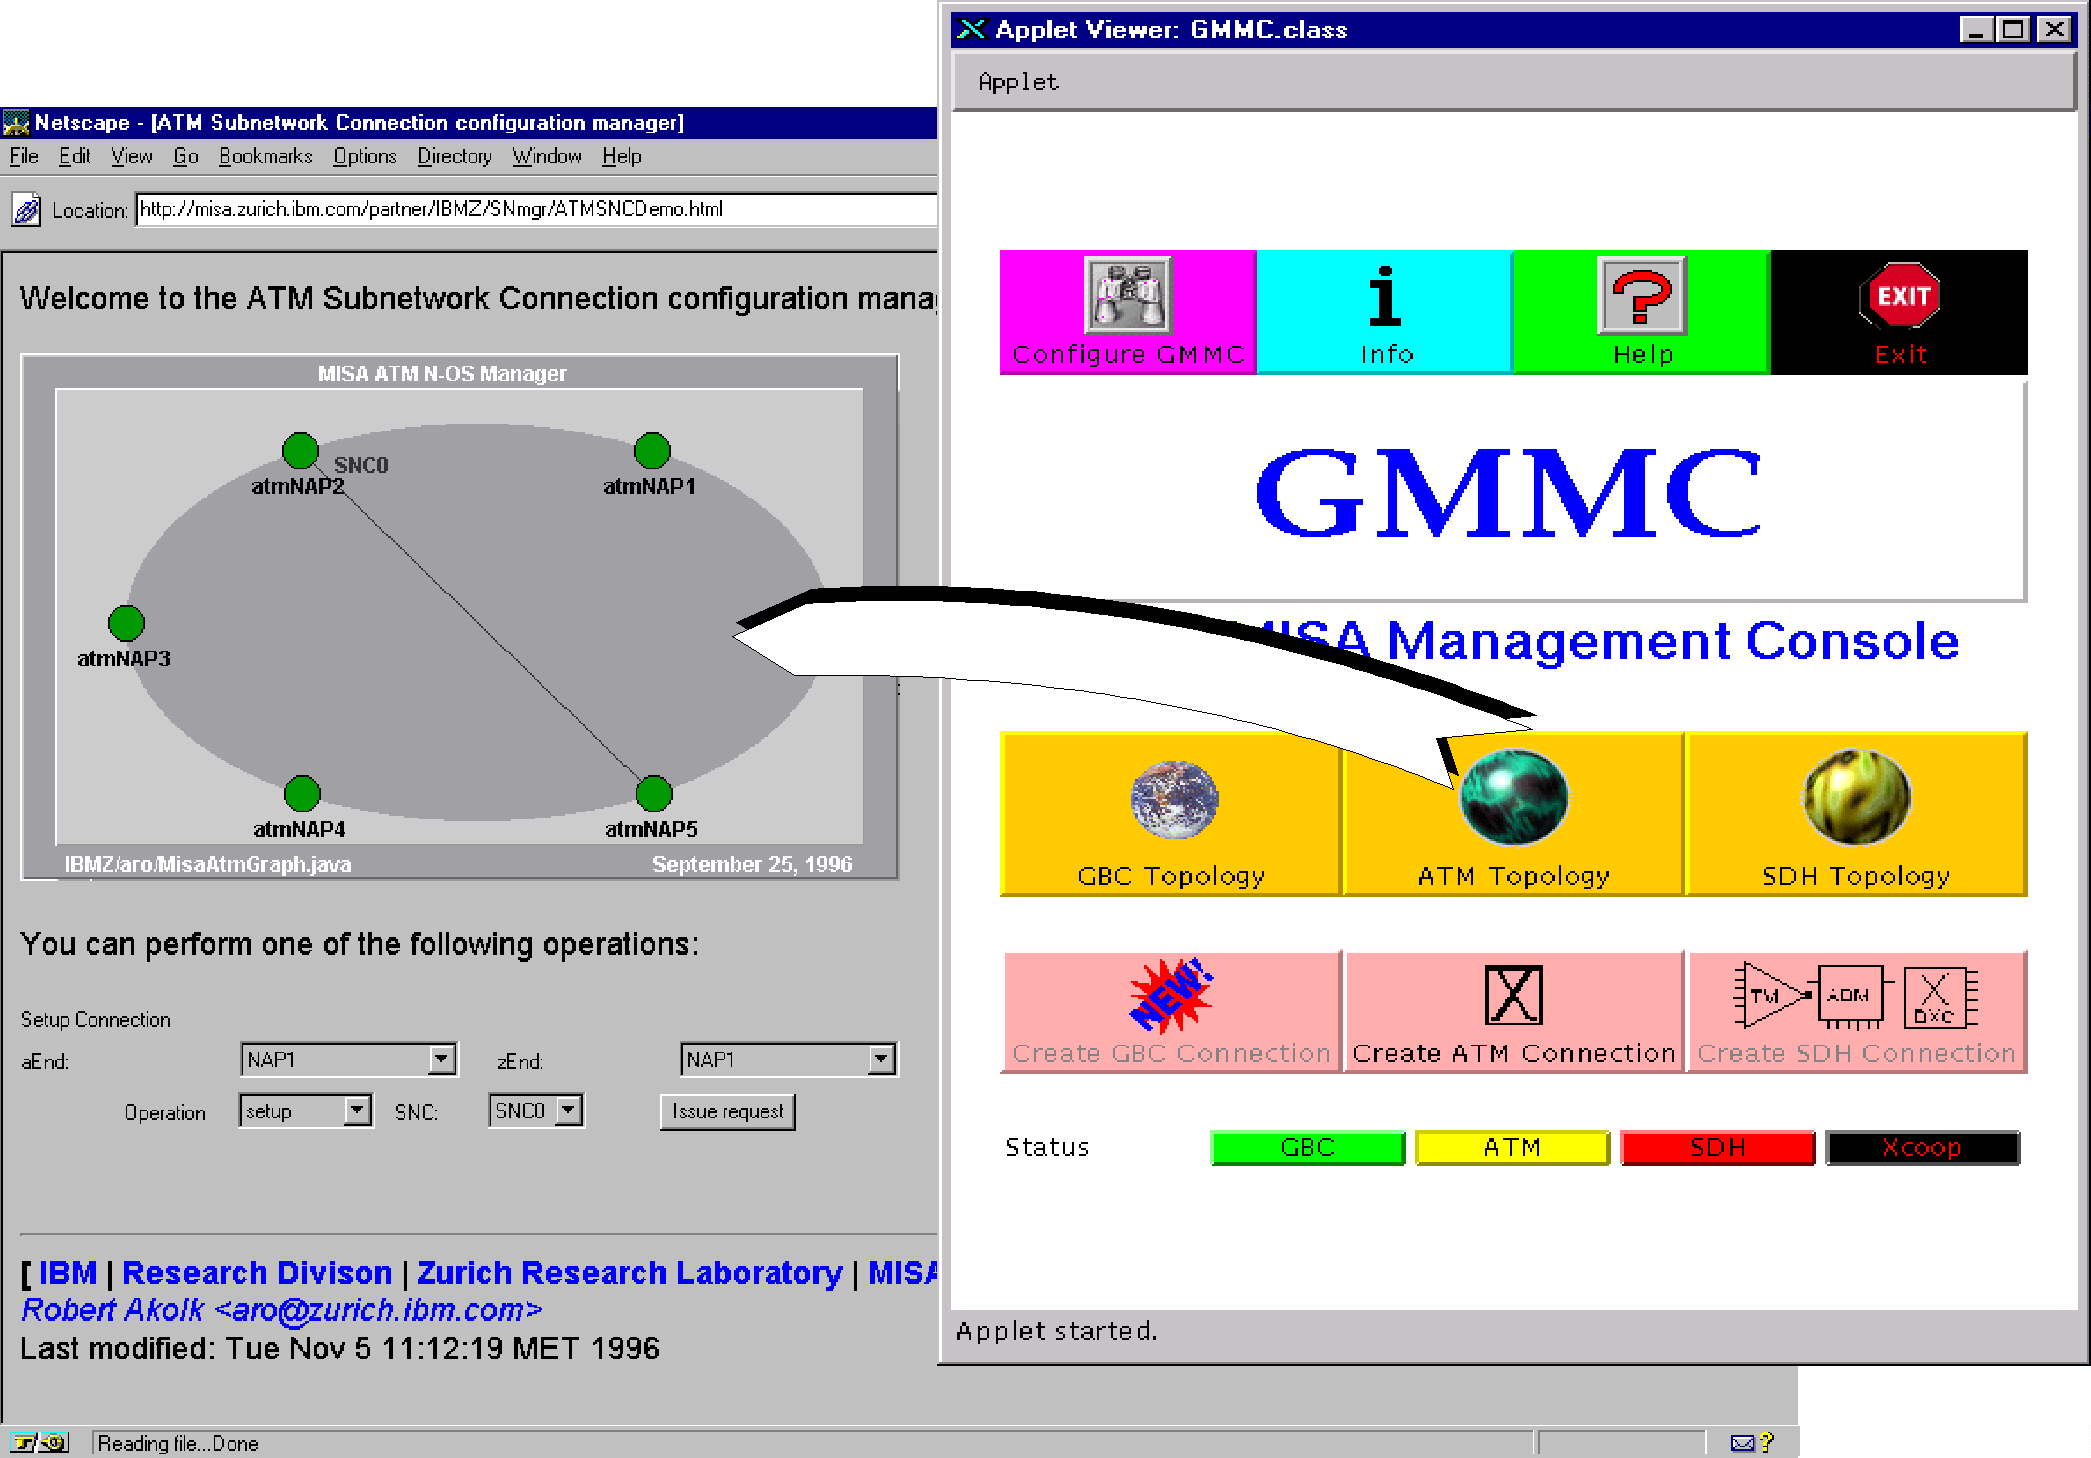 GMMC + ATM Topology Applets